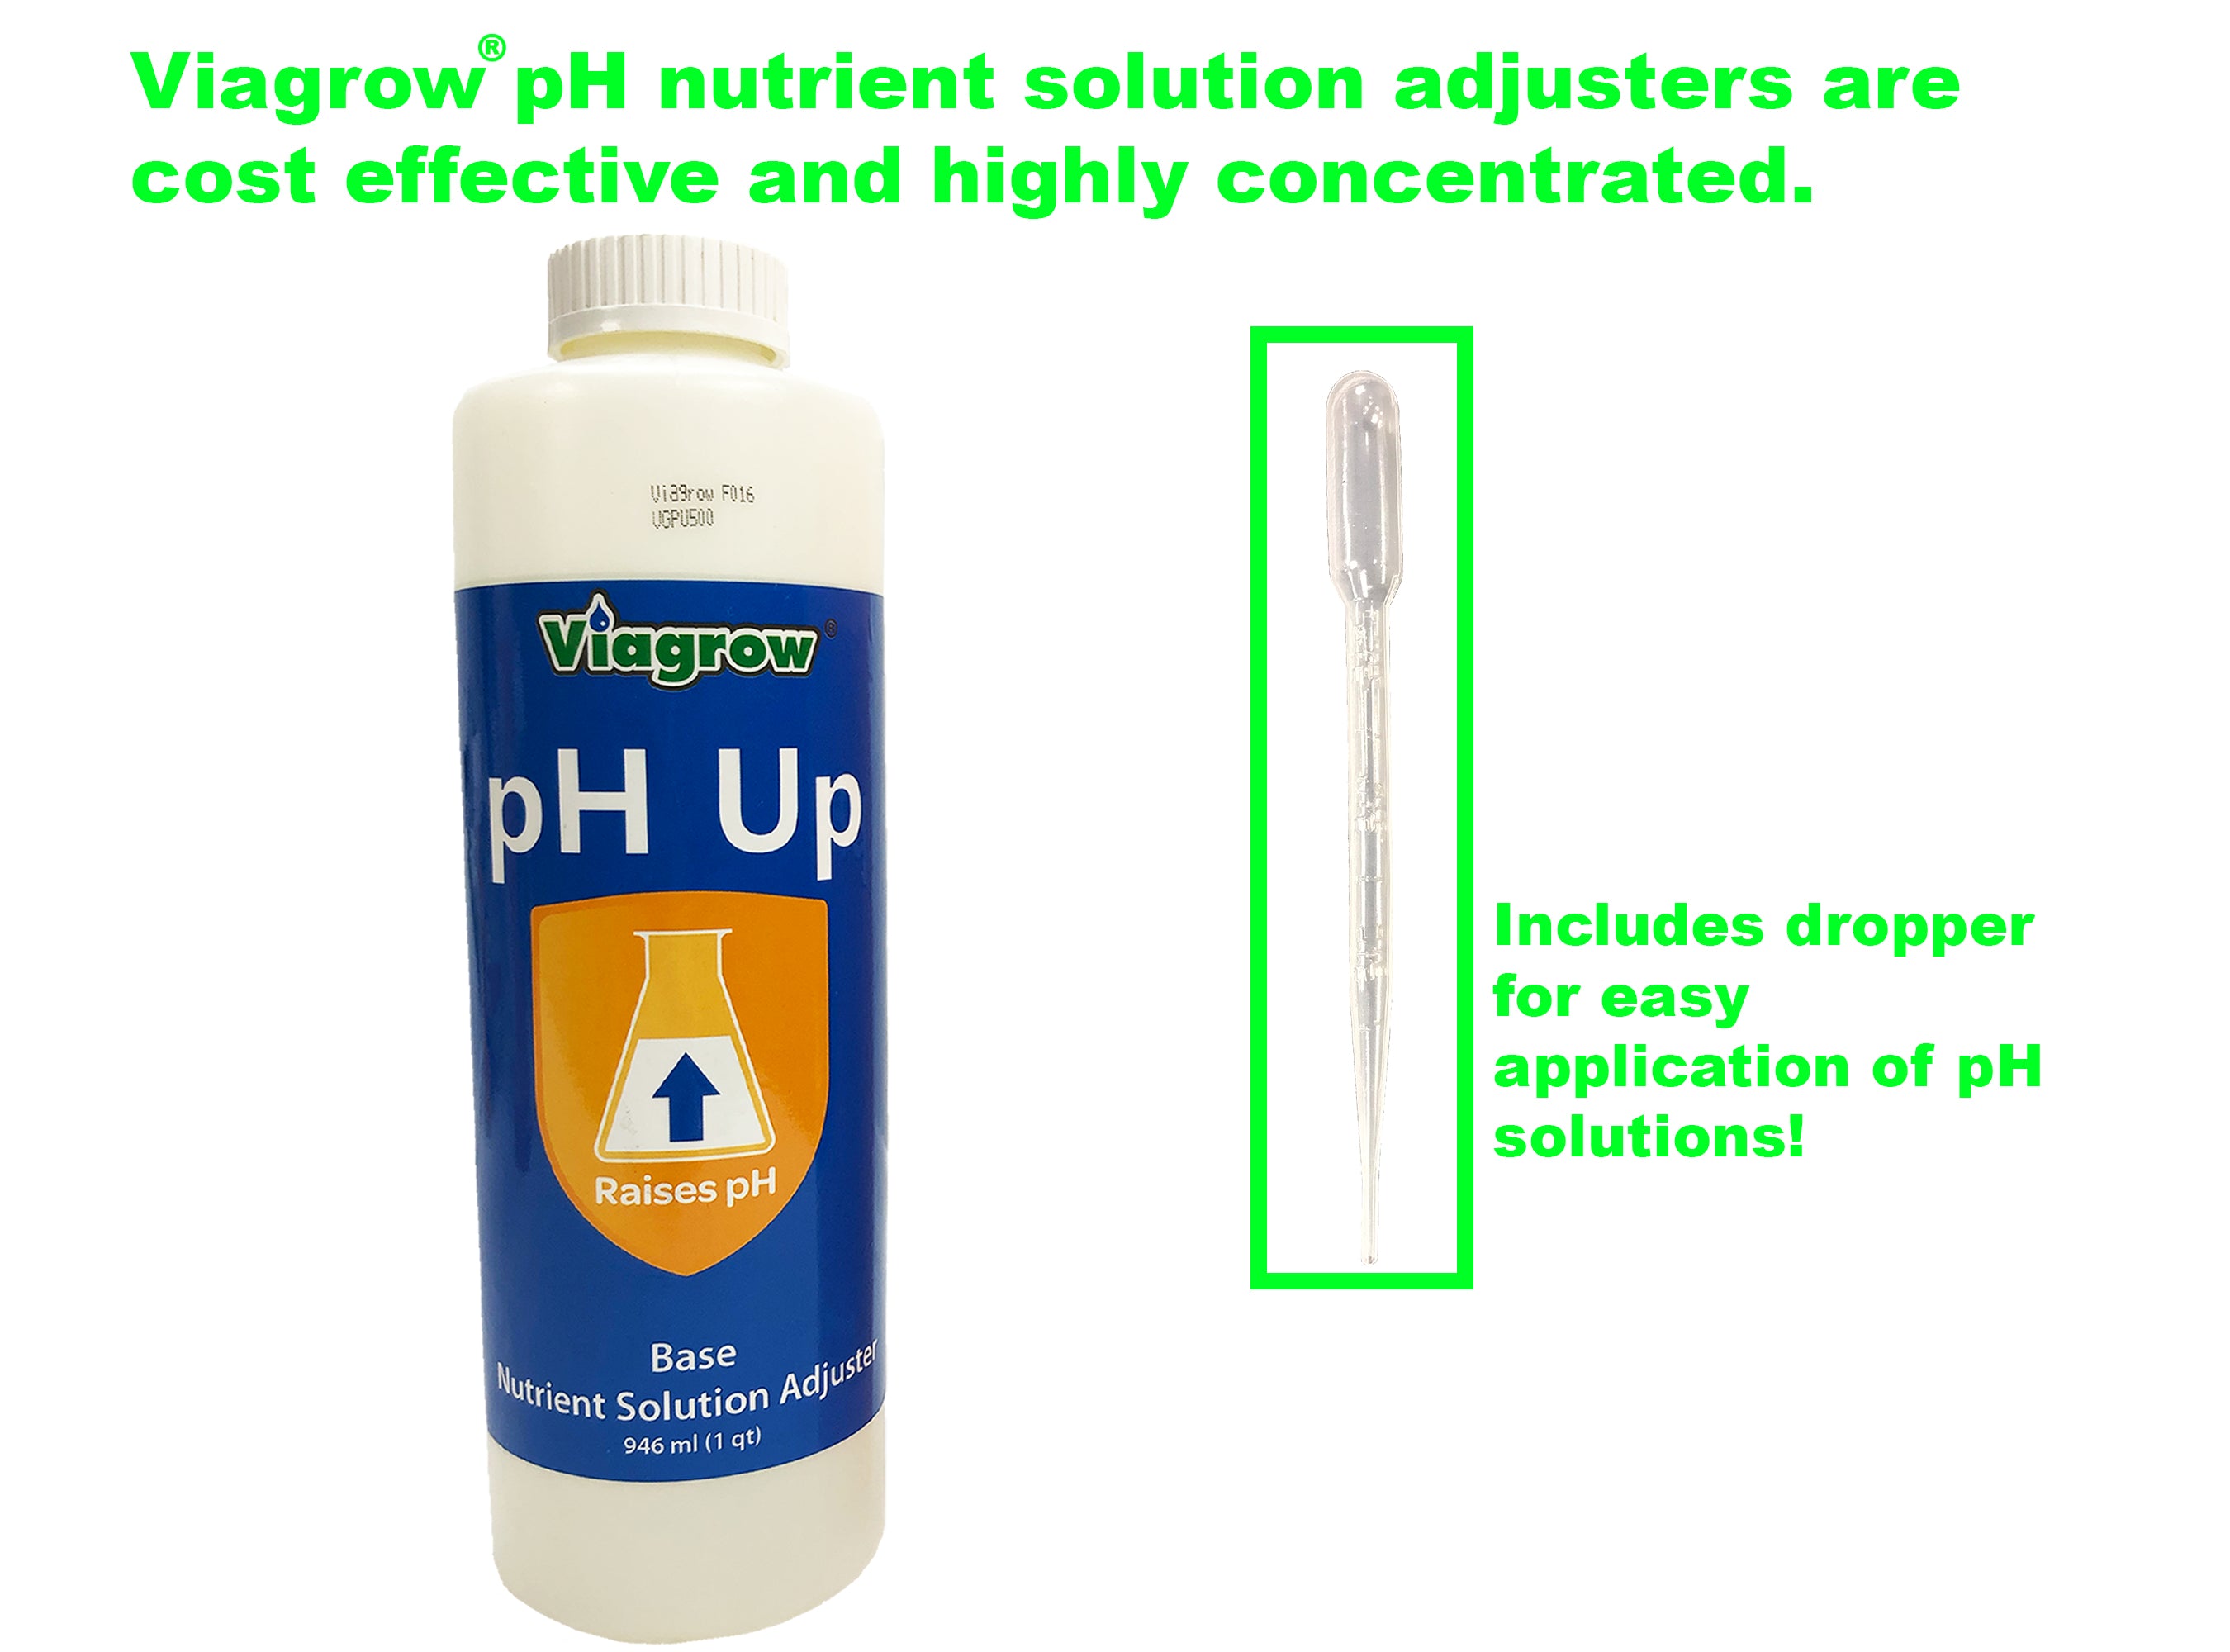 Viagrow pH Solution, Liquid Up QT, Clear, Case of 20